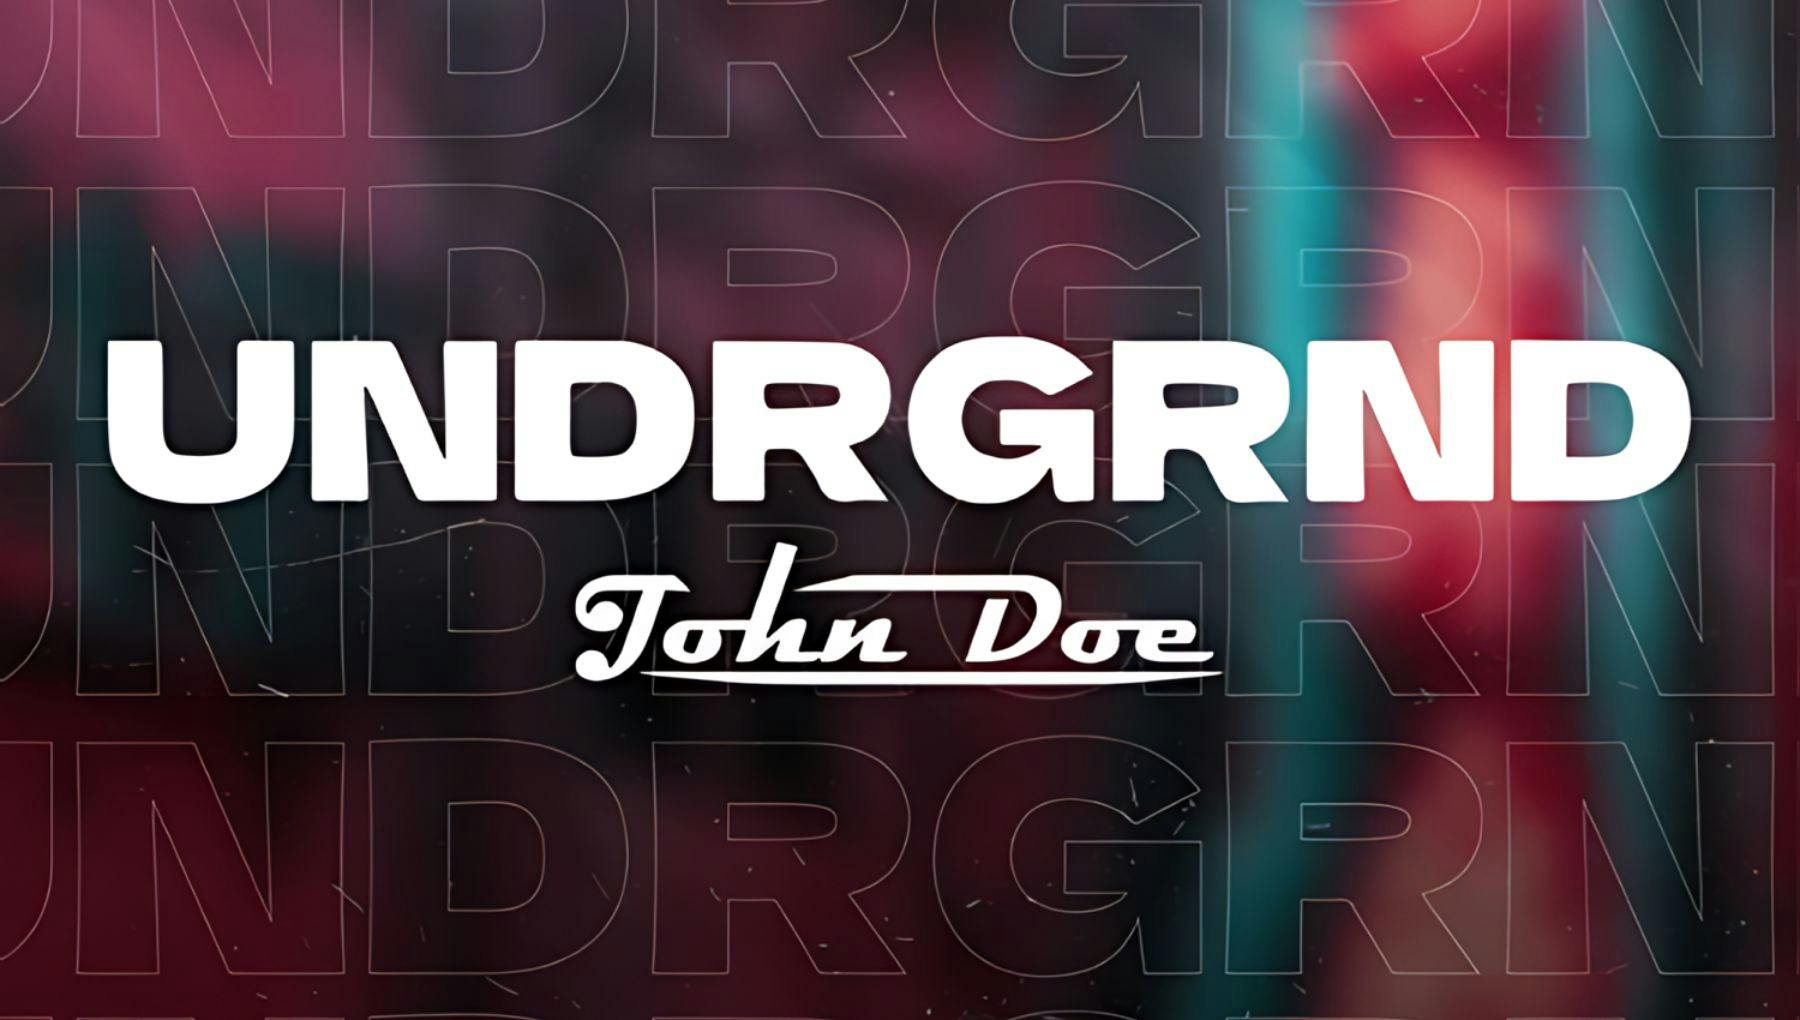 Club John Doe | UNDRGRND